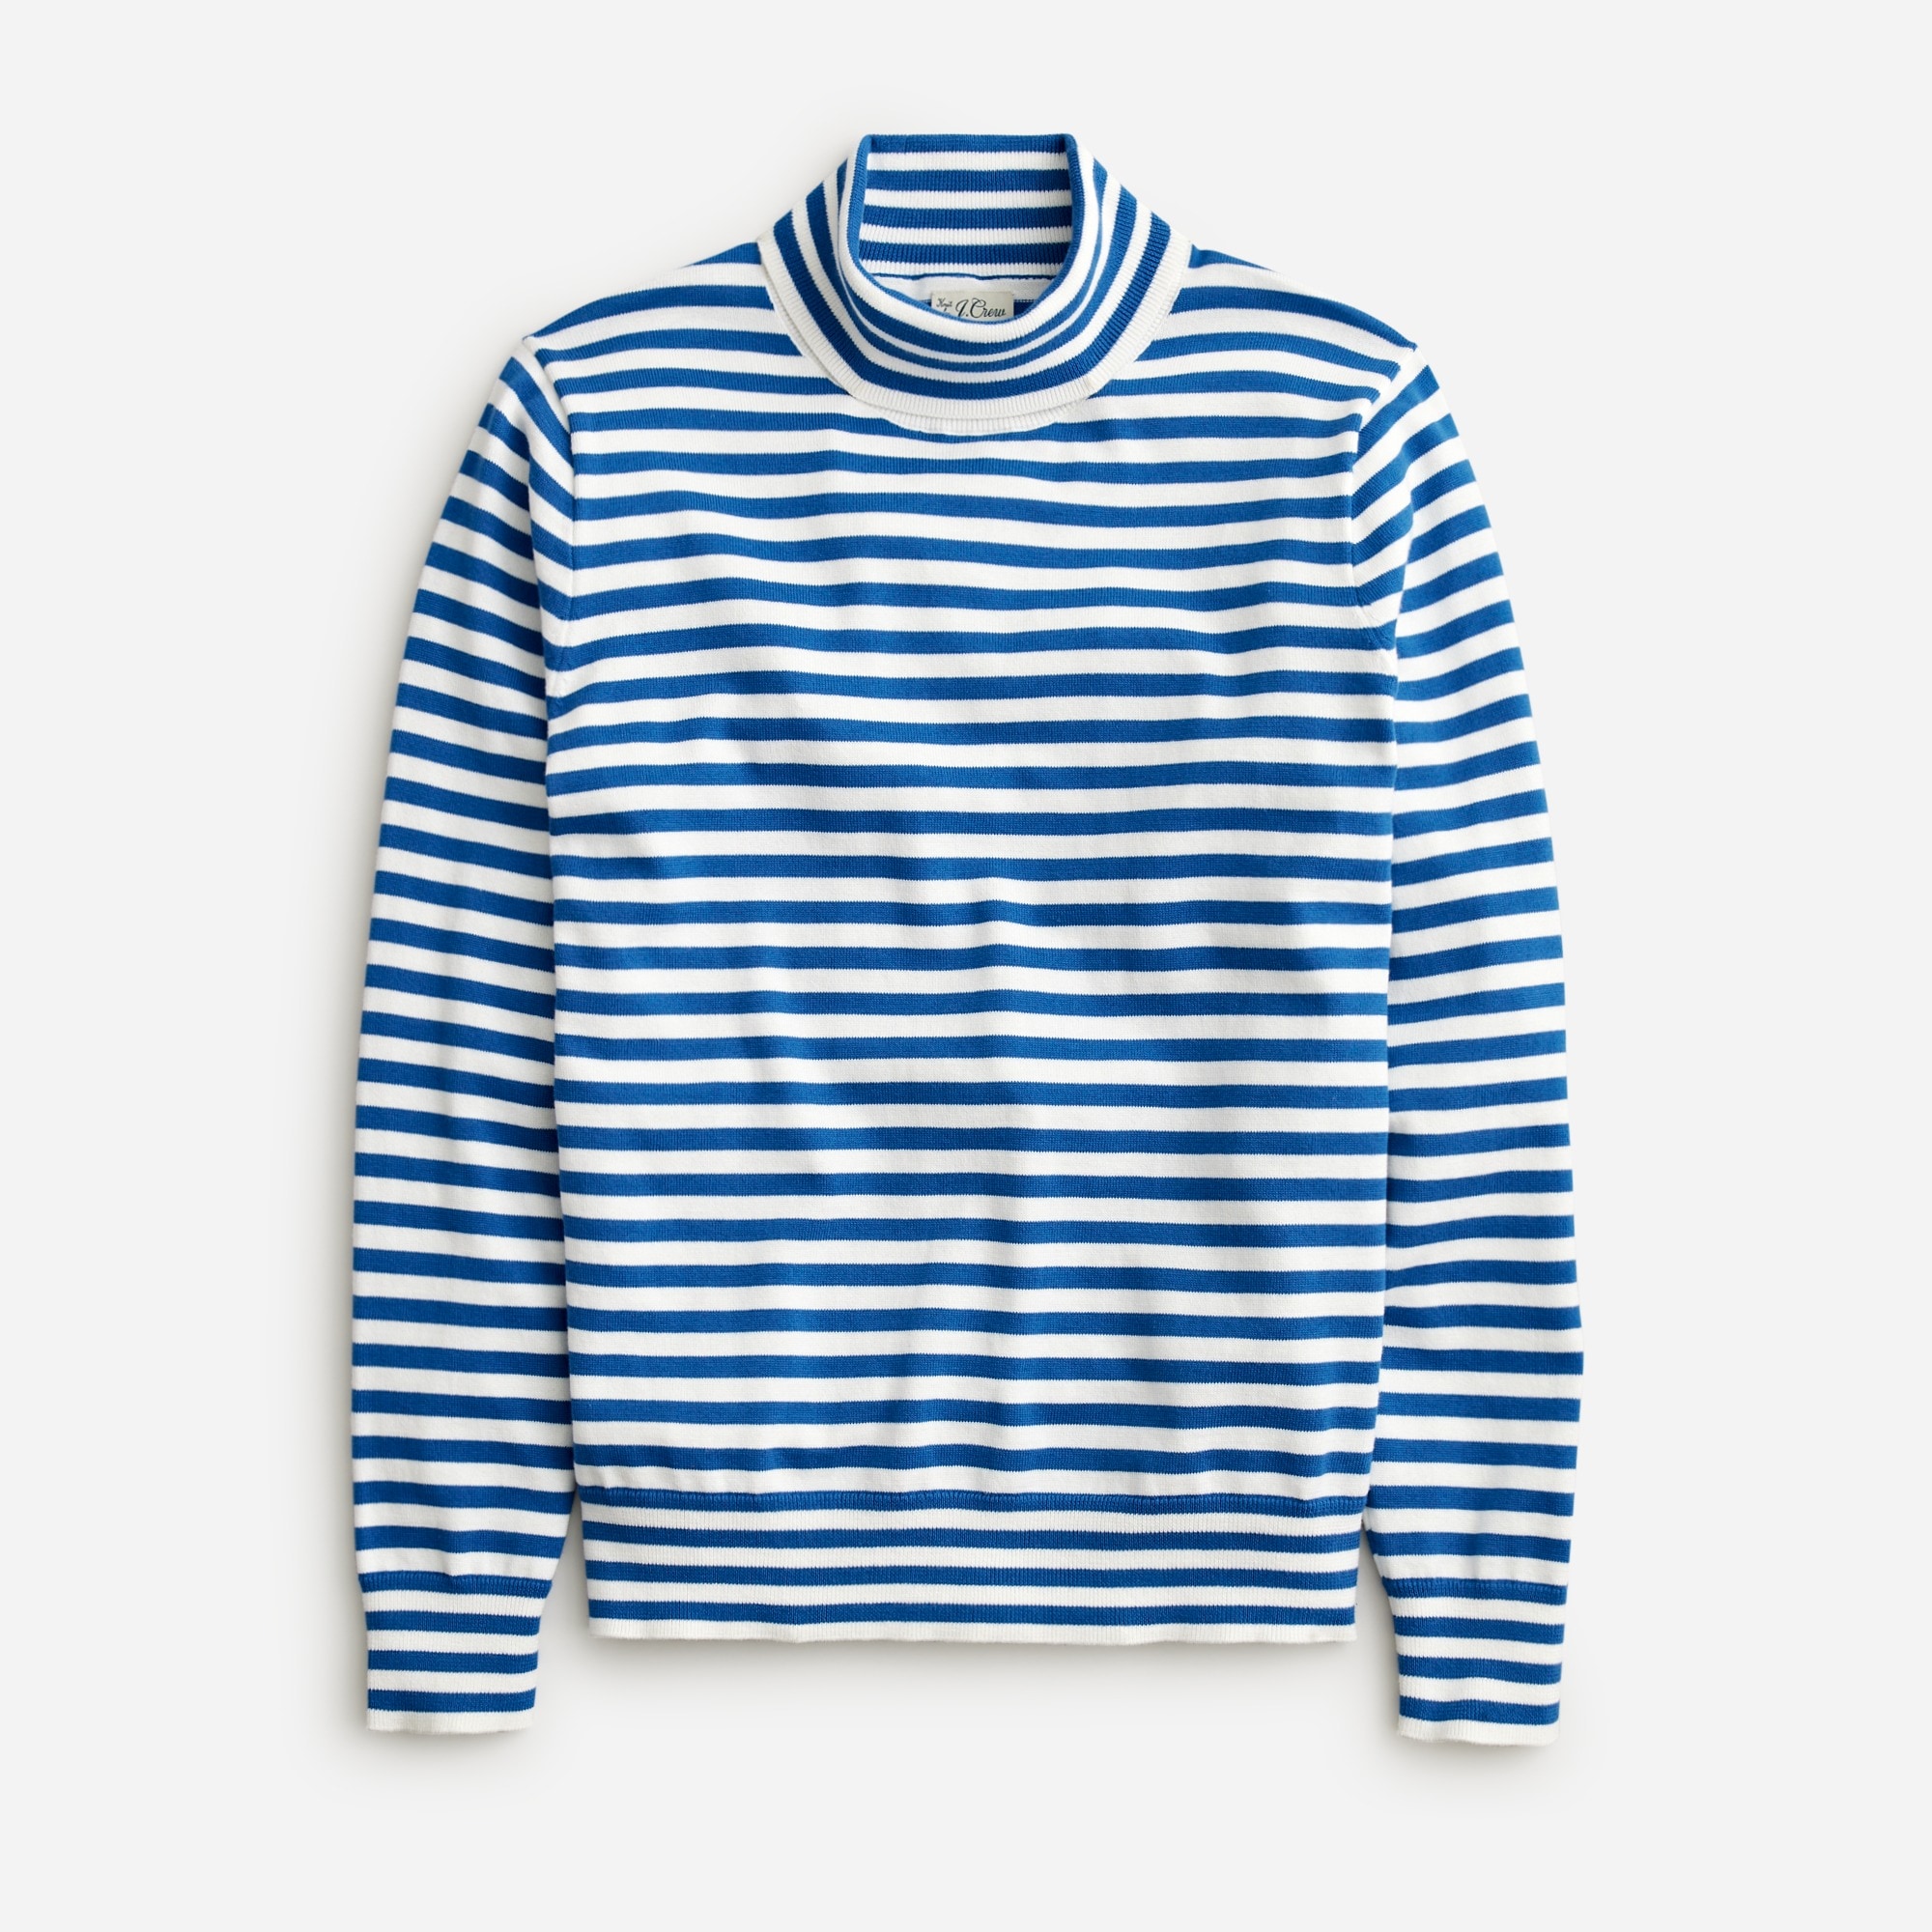 mens Cotton turtleneck sweater in stripe